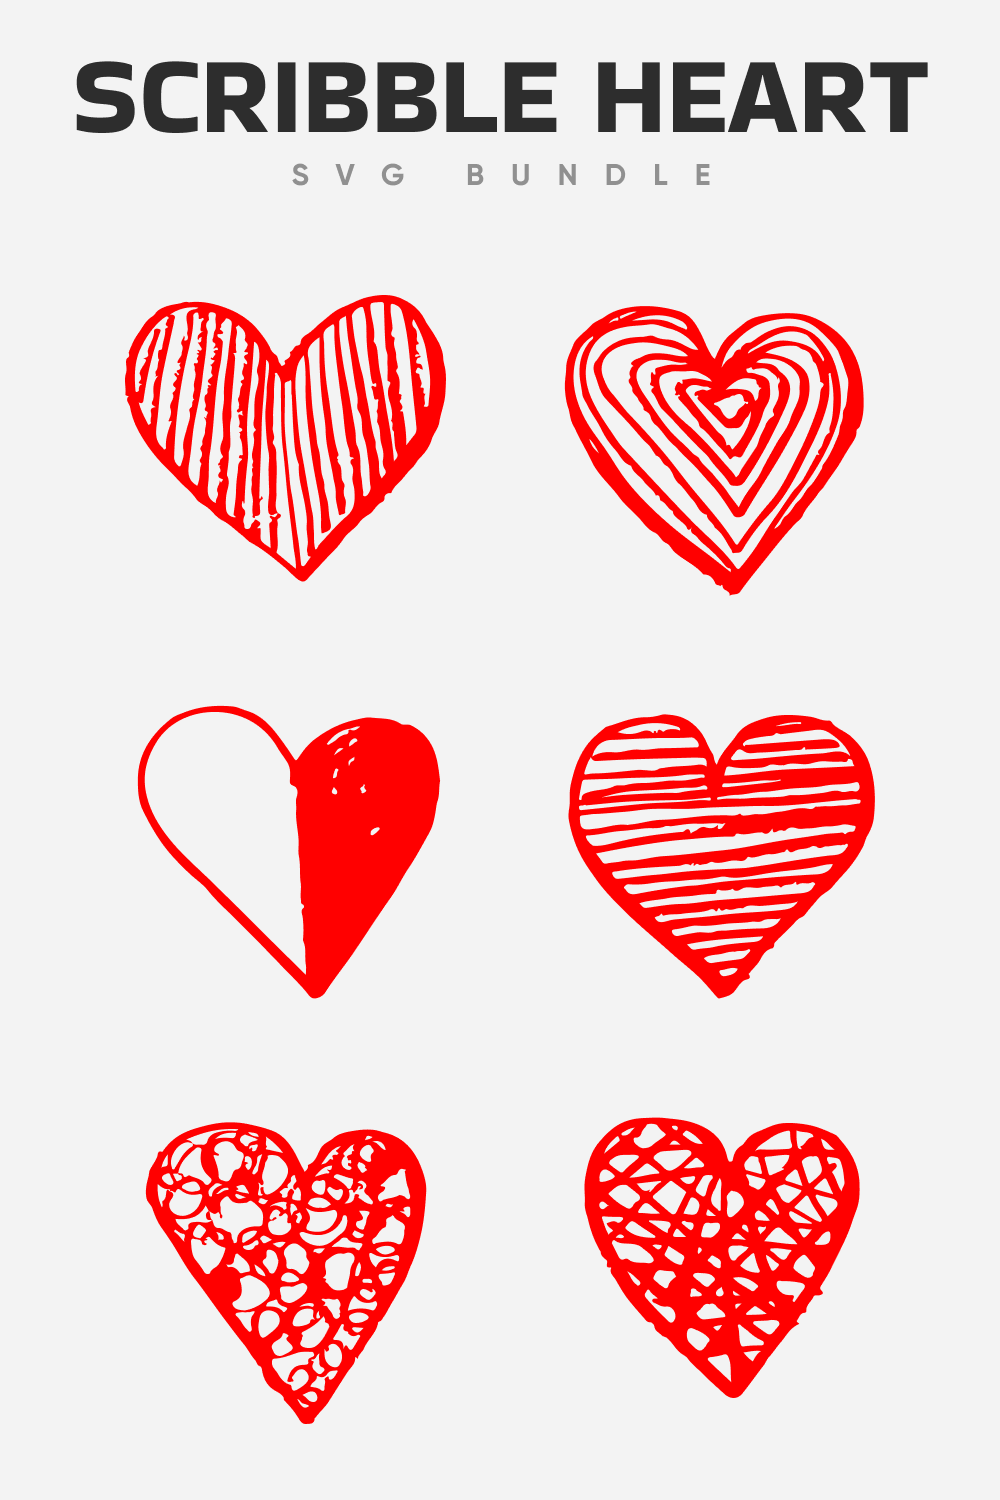 Scribble heart SVG.